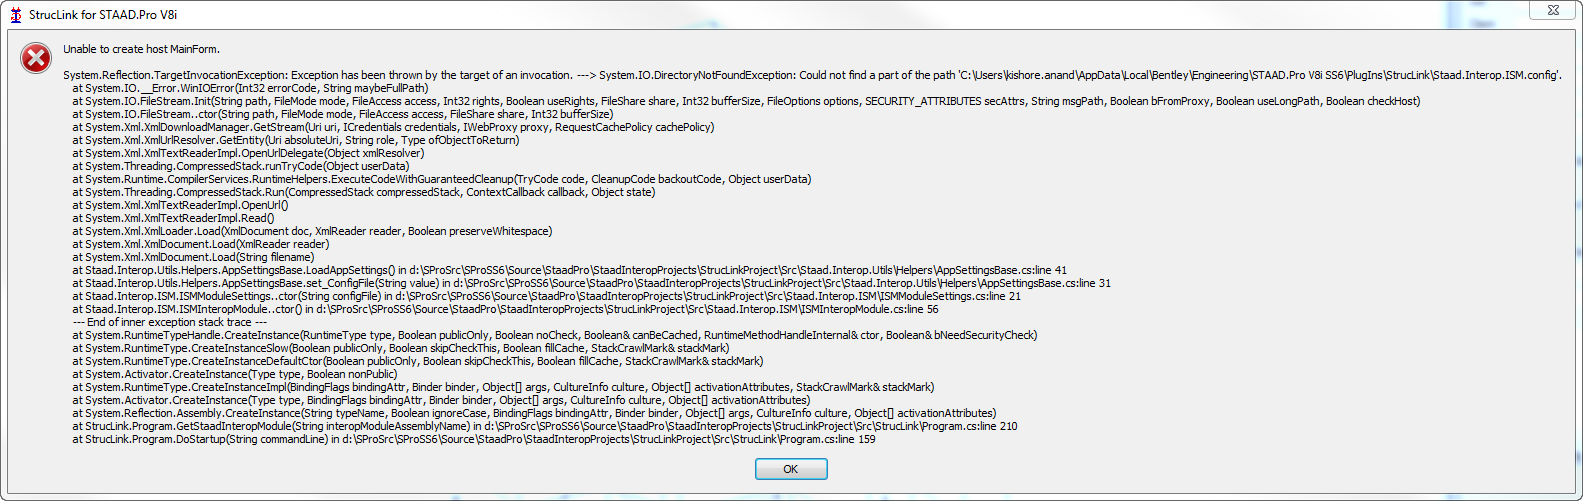 EFI COLORPROOF XF 4.5 CRACK Torrent Download.rar Full